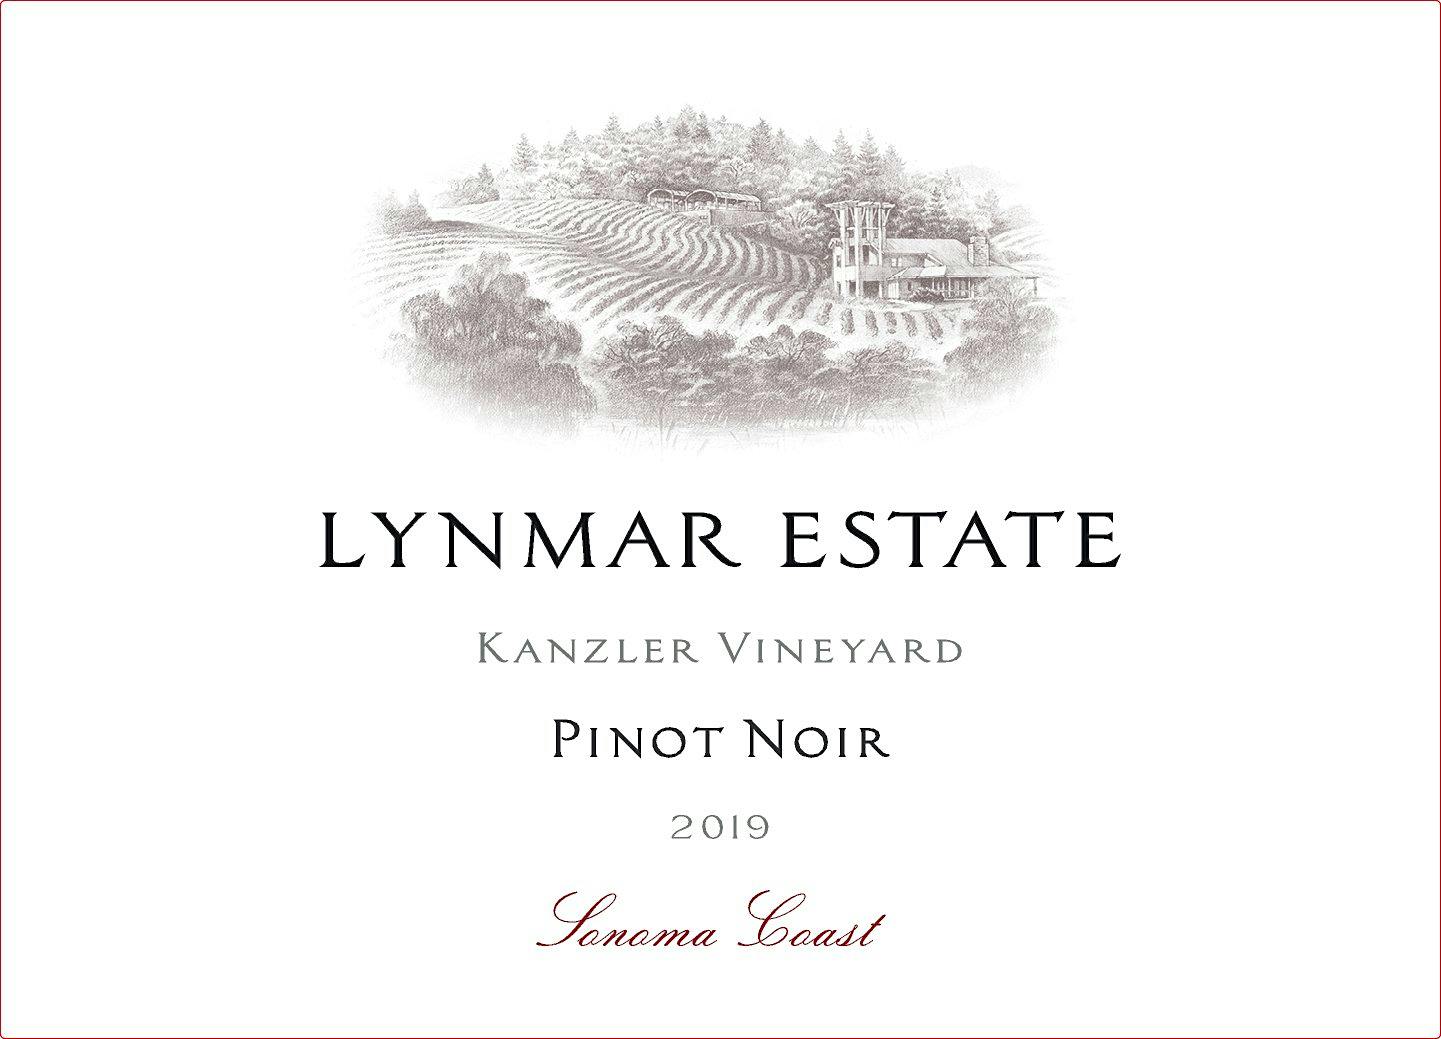 Label for Lynmar